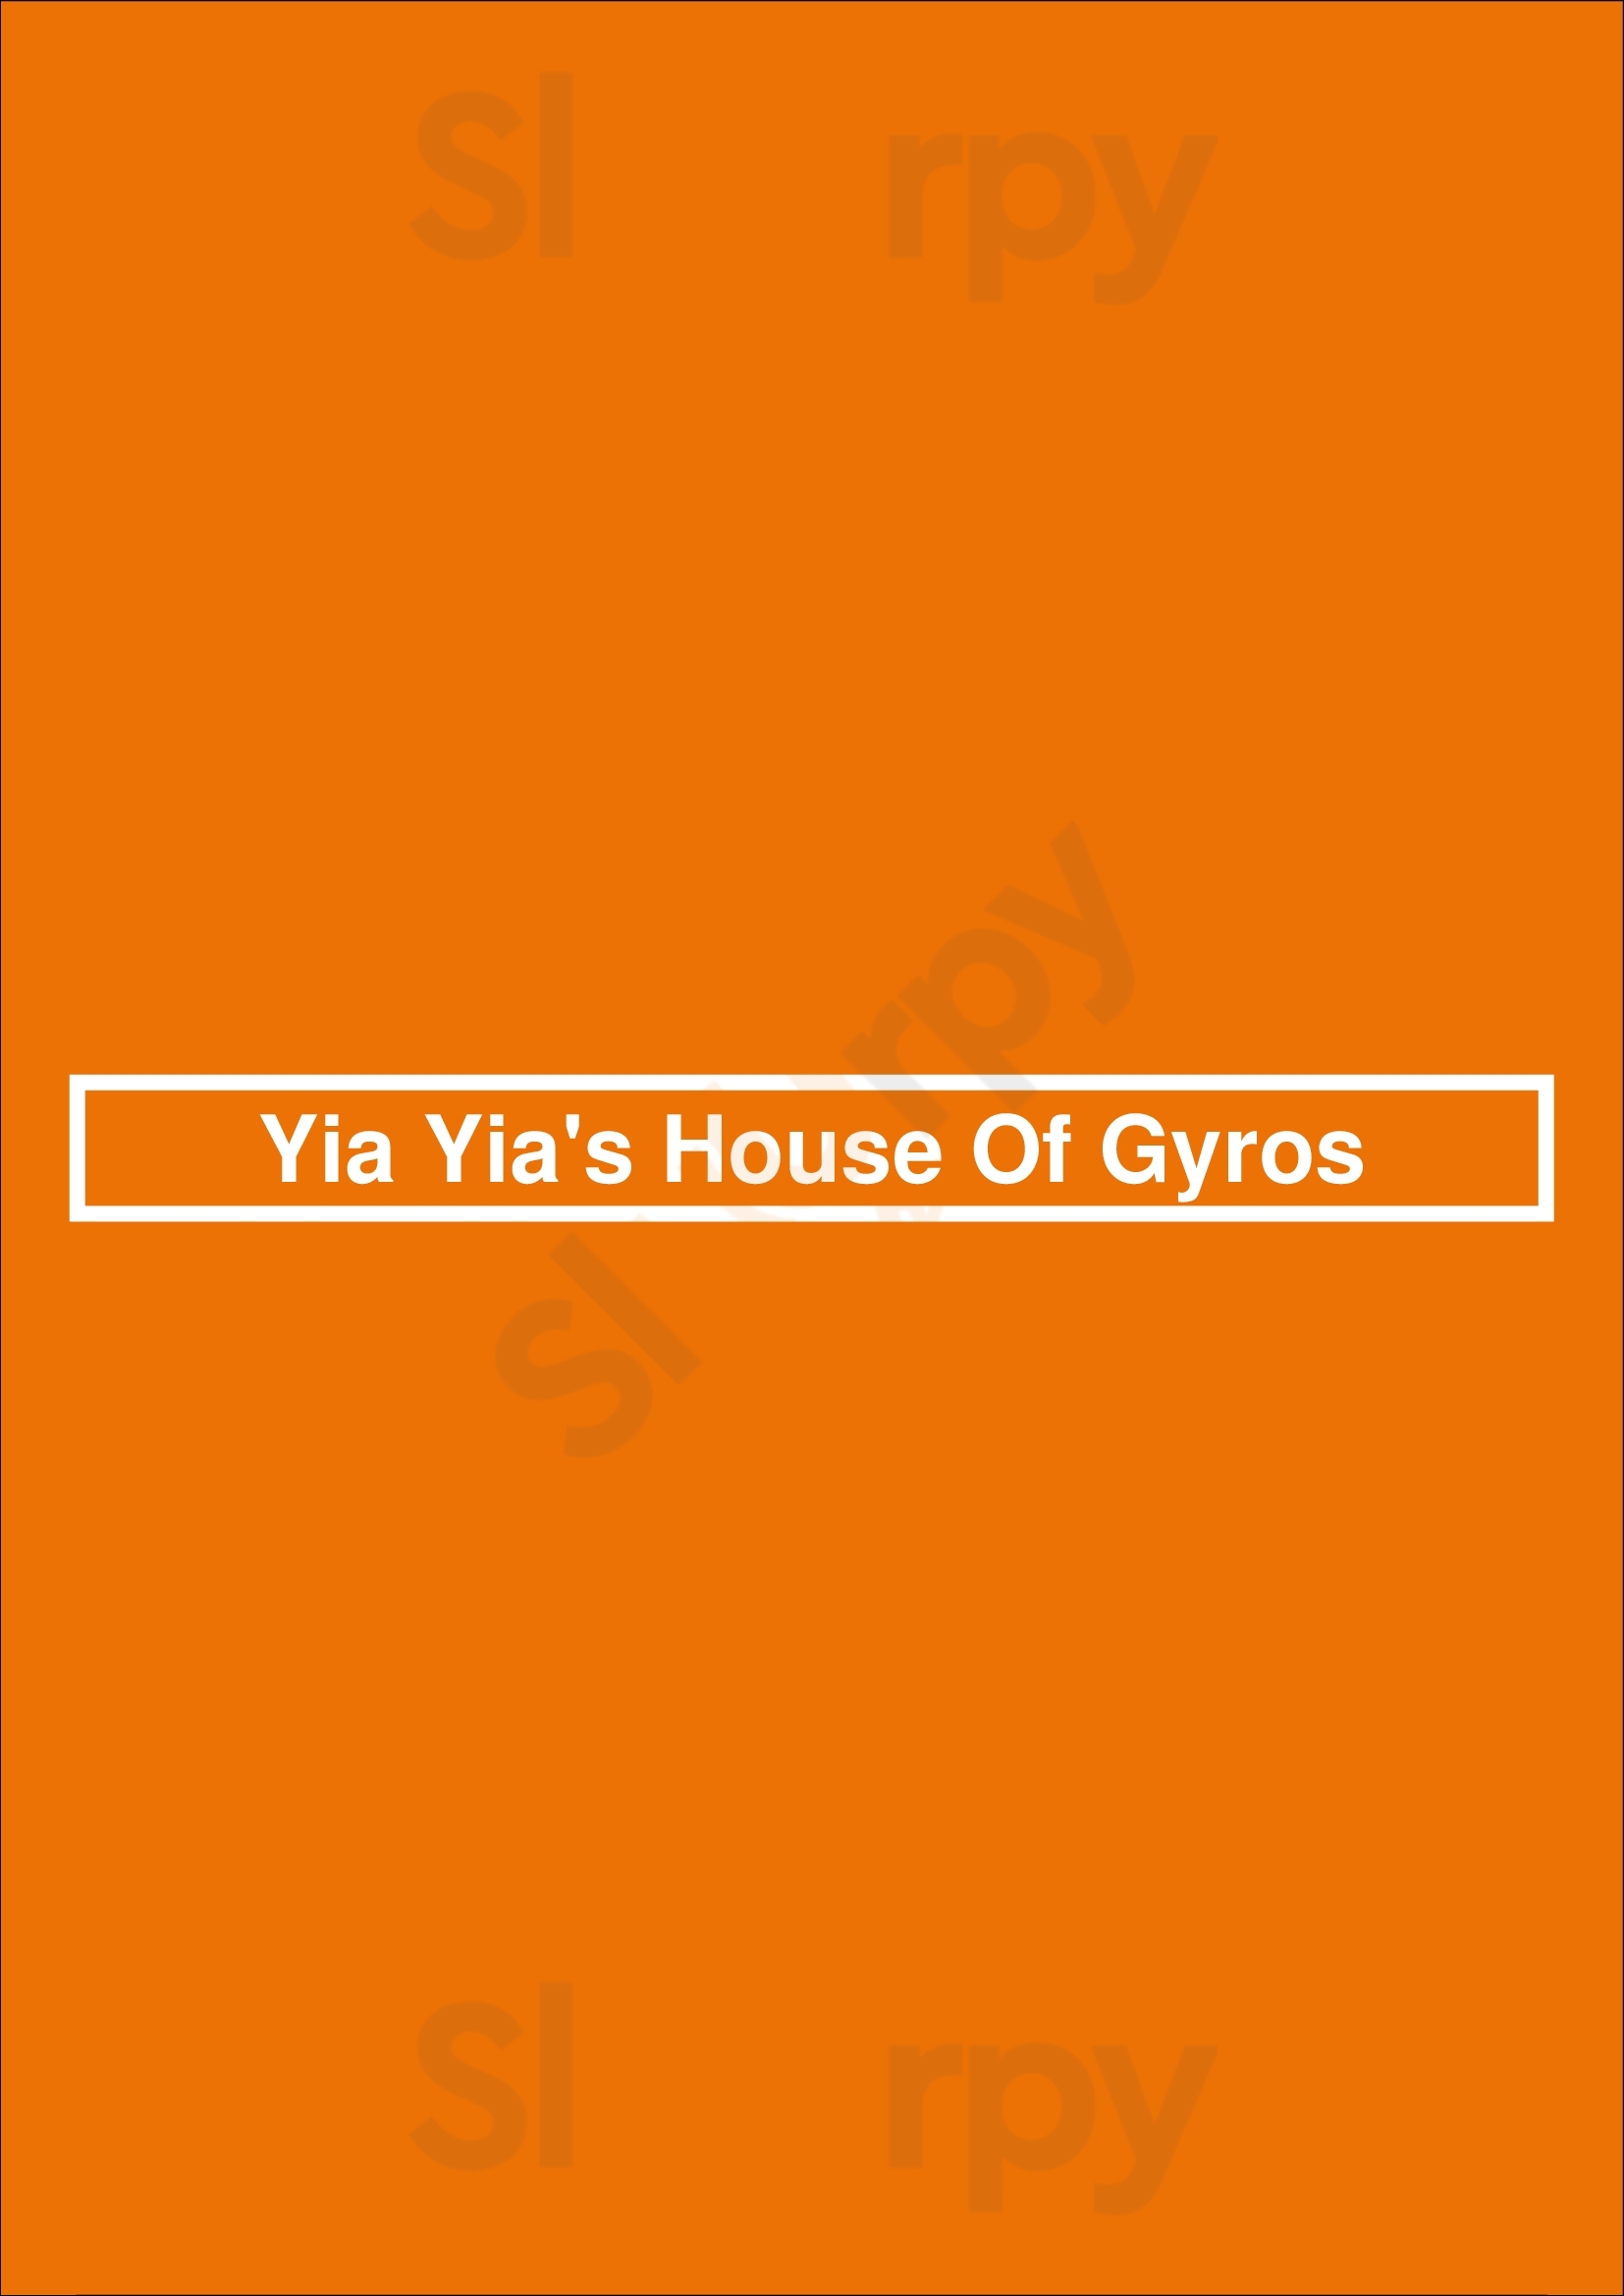 Yia Yia's House Of Gyros Rockwall Menu - 1